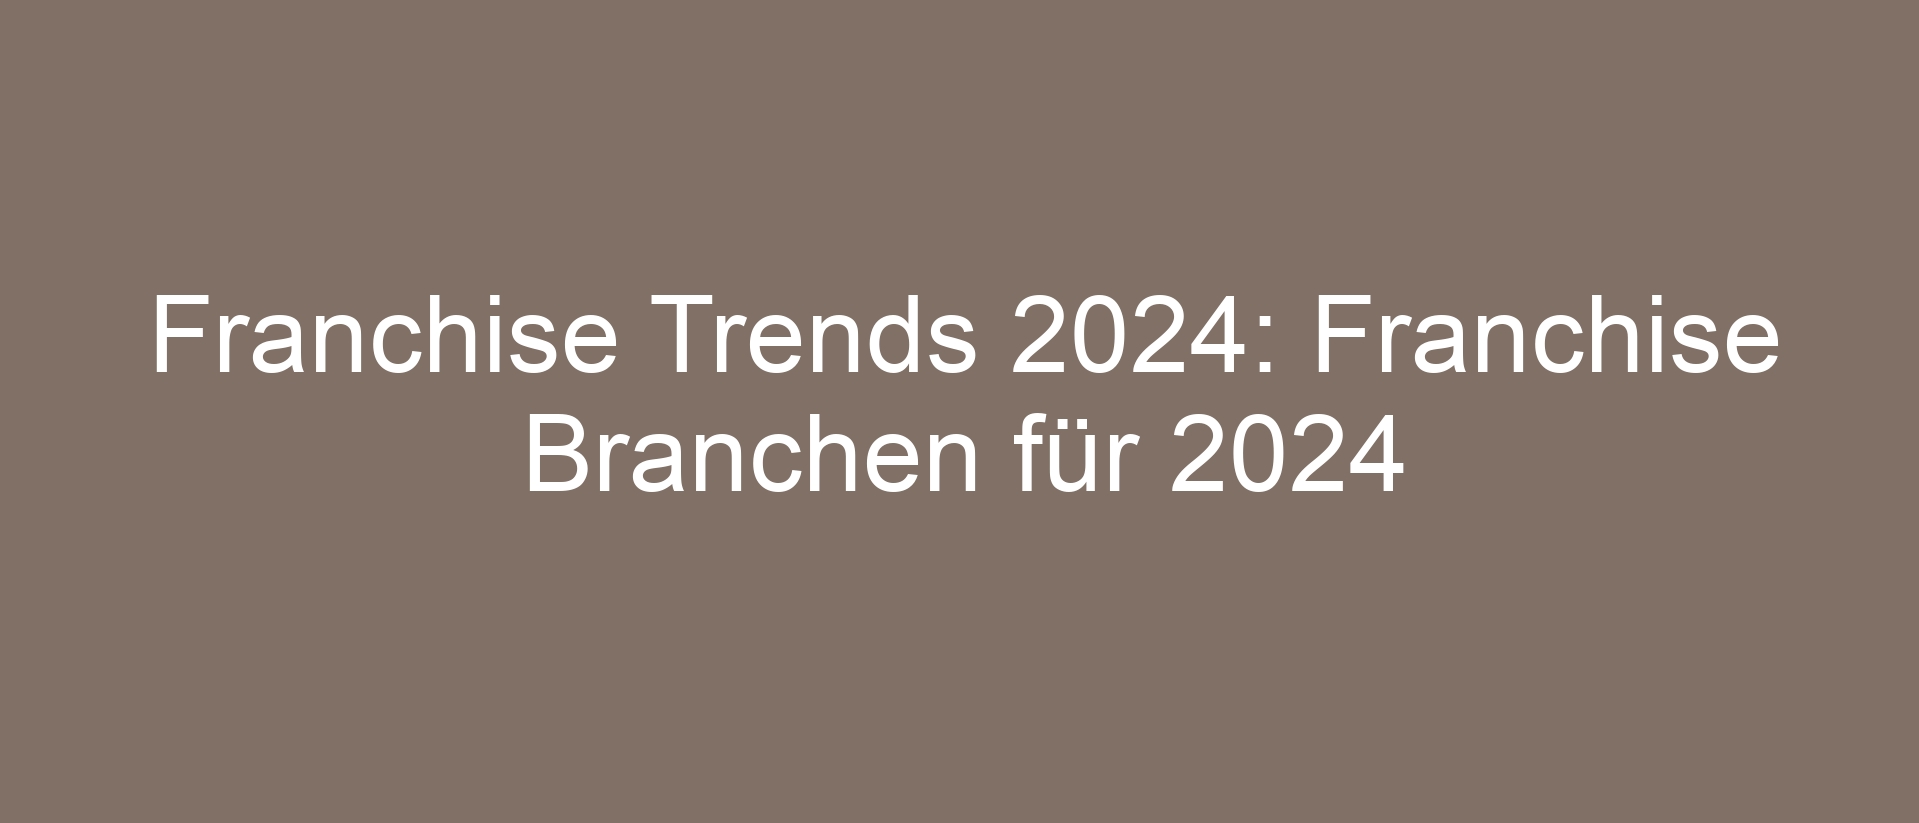 Franchise Trends 2024: Franchise Branchen für 2024